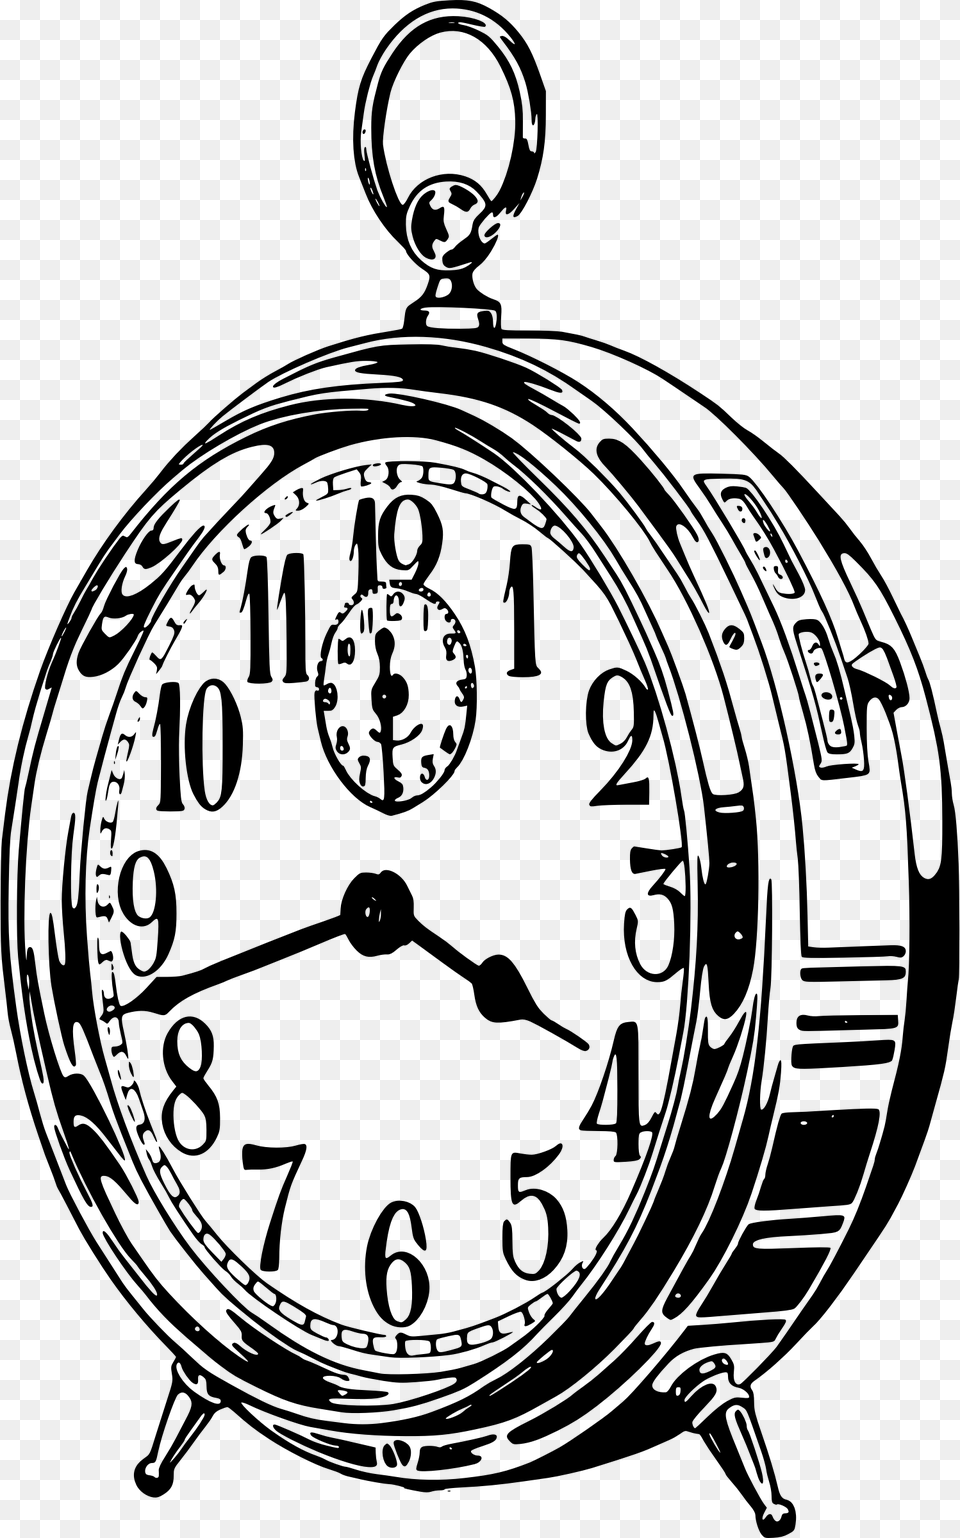 Classic Alarm Clock Clip Arts Clock Black And White, Gray Free Transparent Png